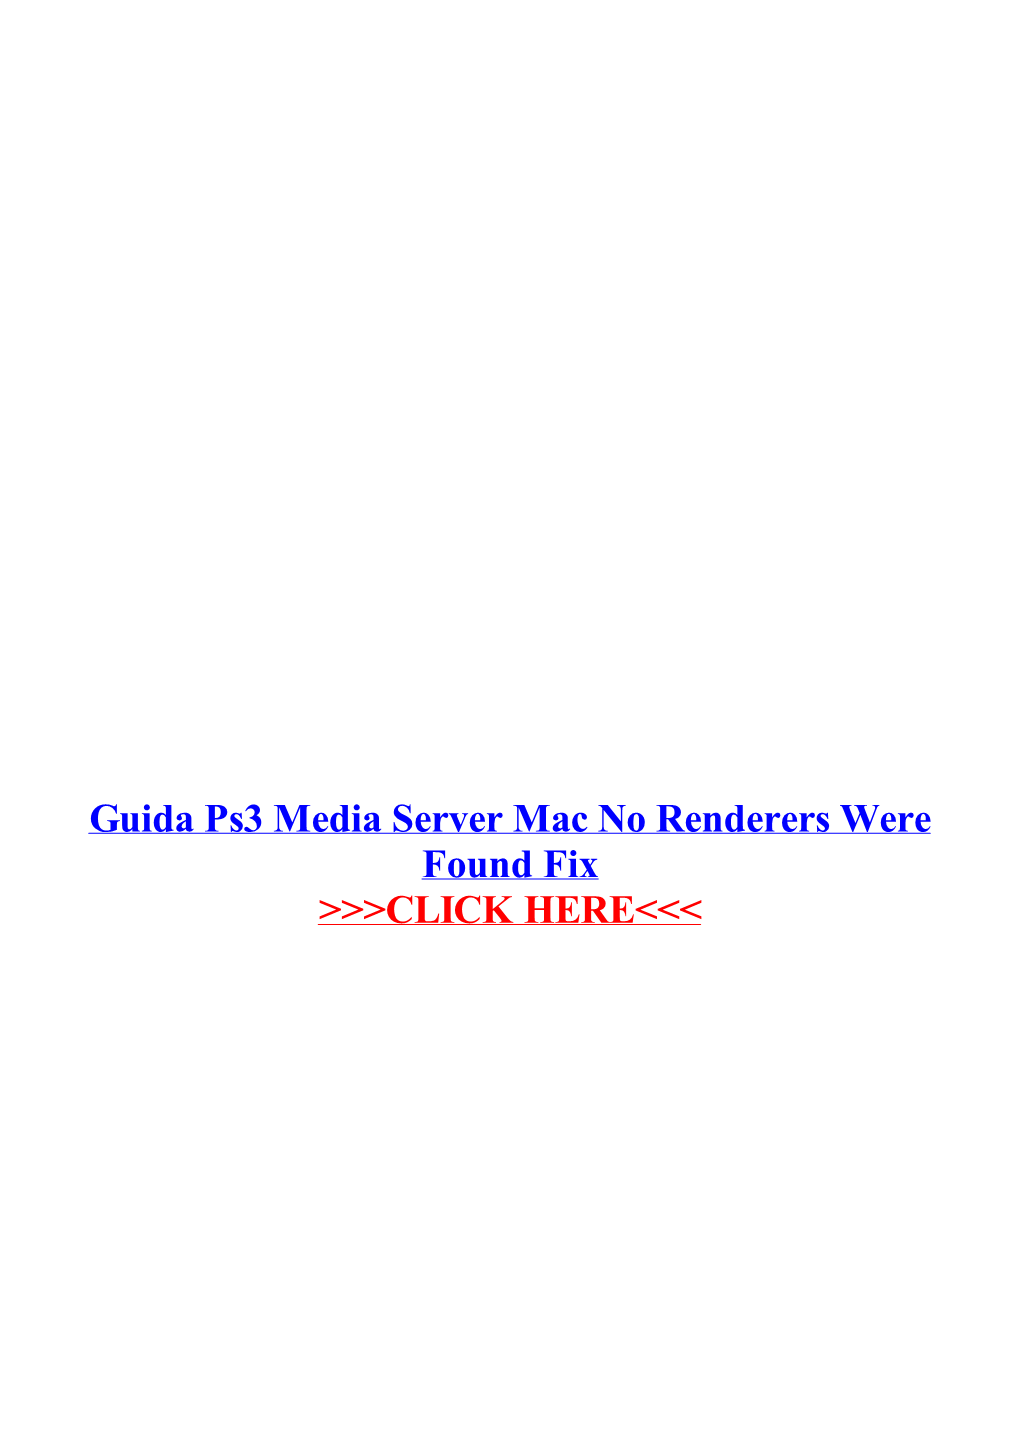 Guida Ps3 Media Server Mac No Renderers Were Found Fix